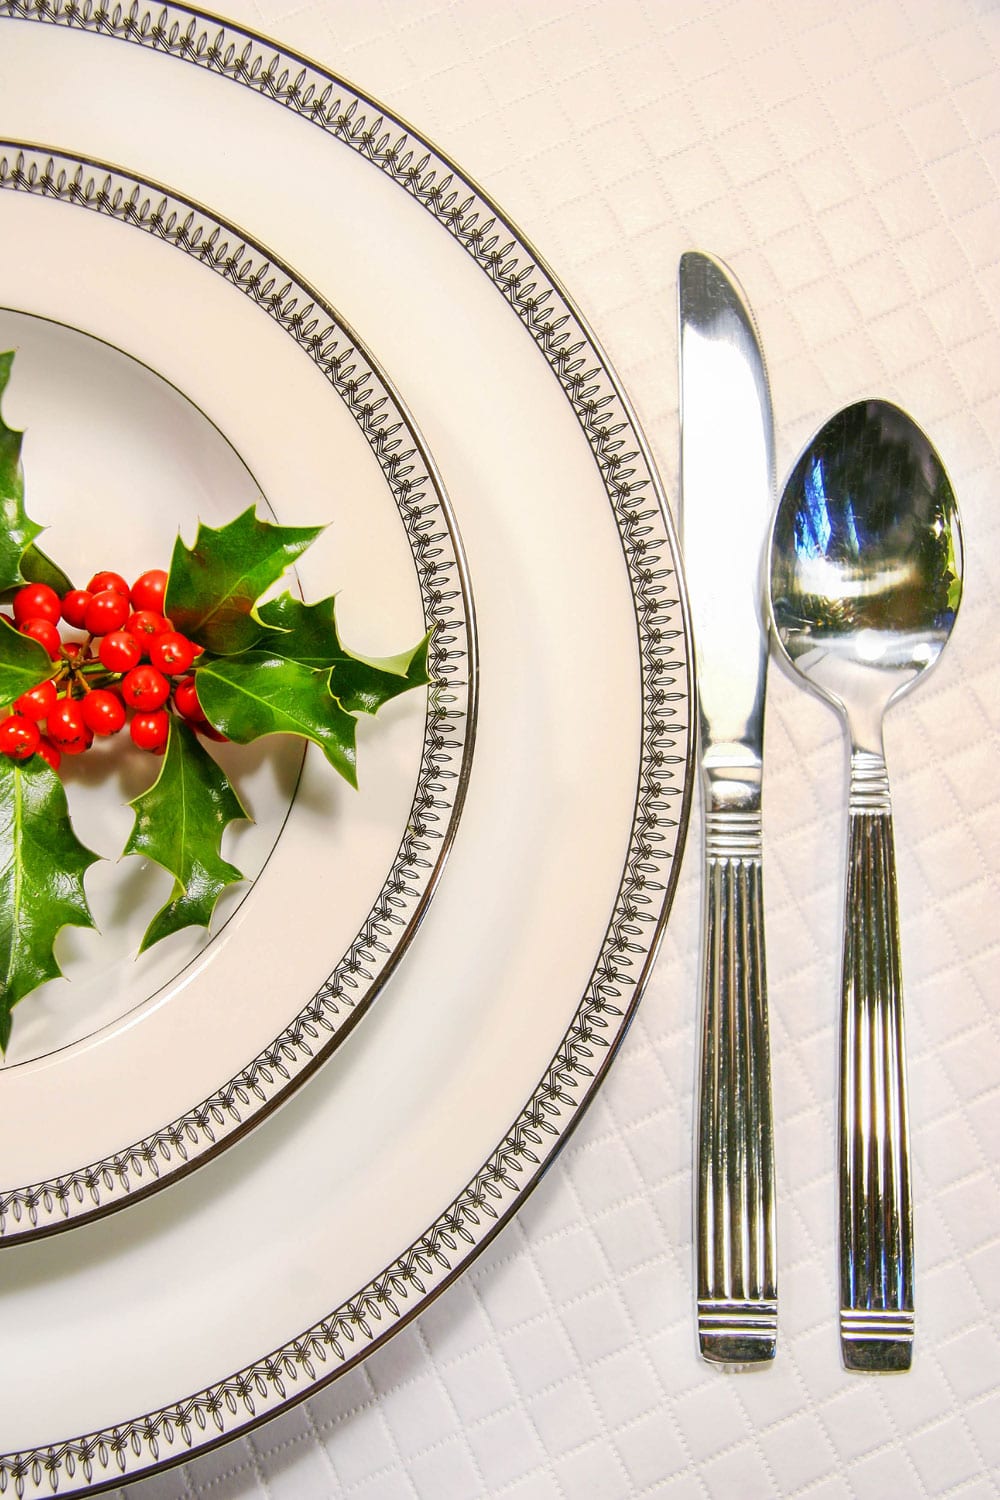 A twist on holiday dinners | TBR News Media